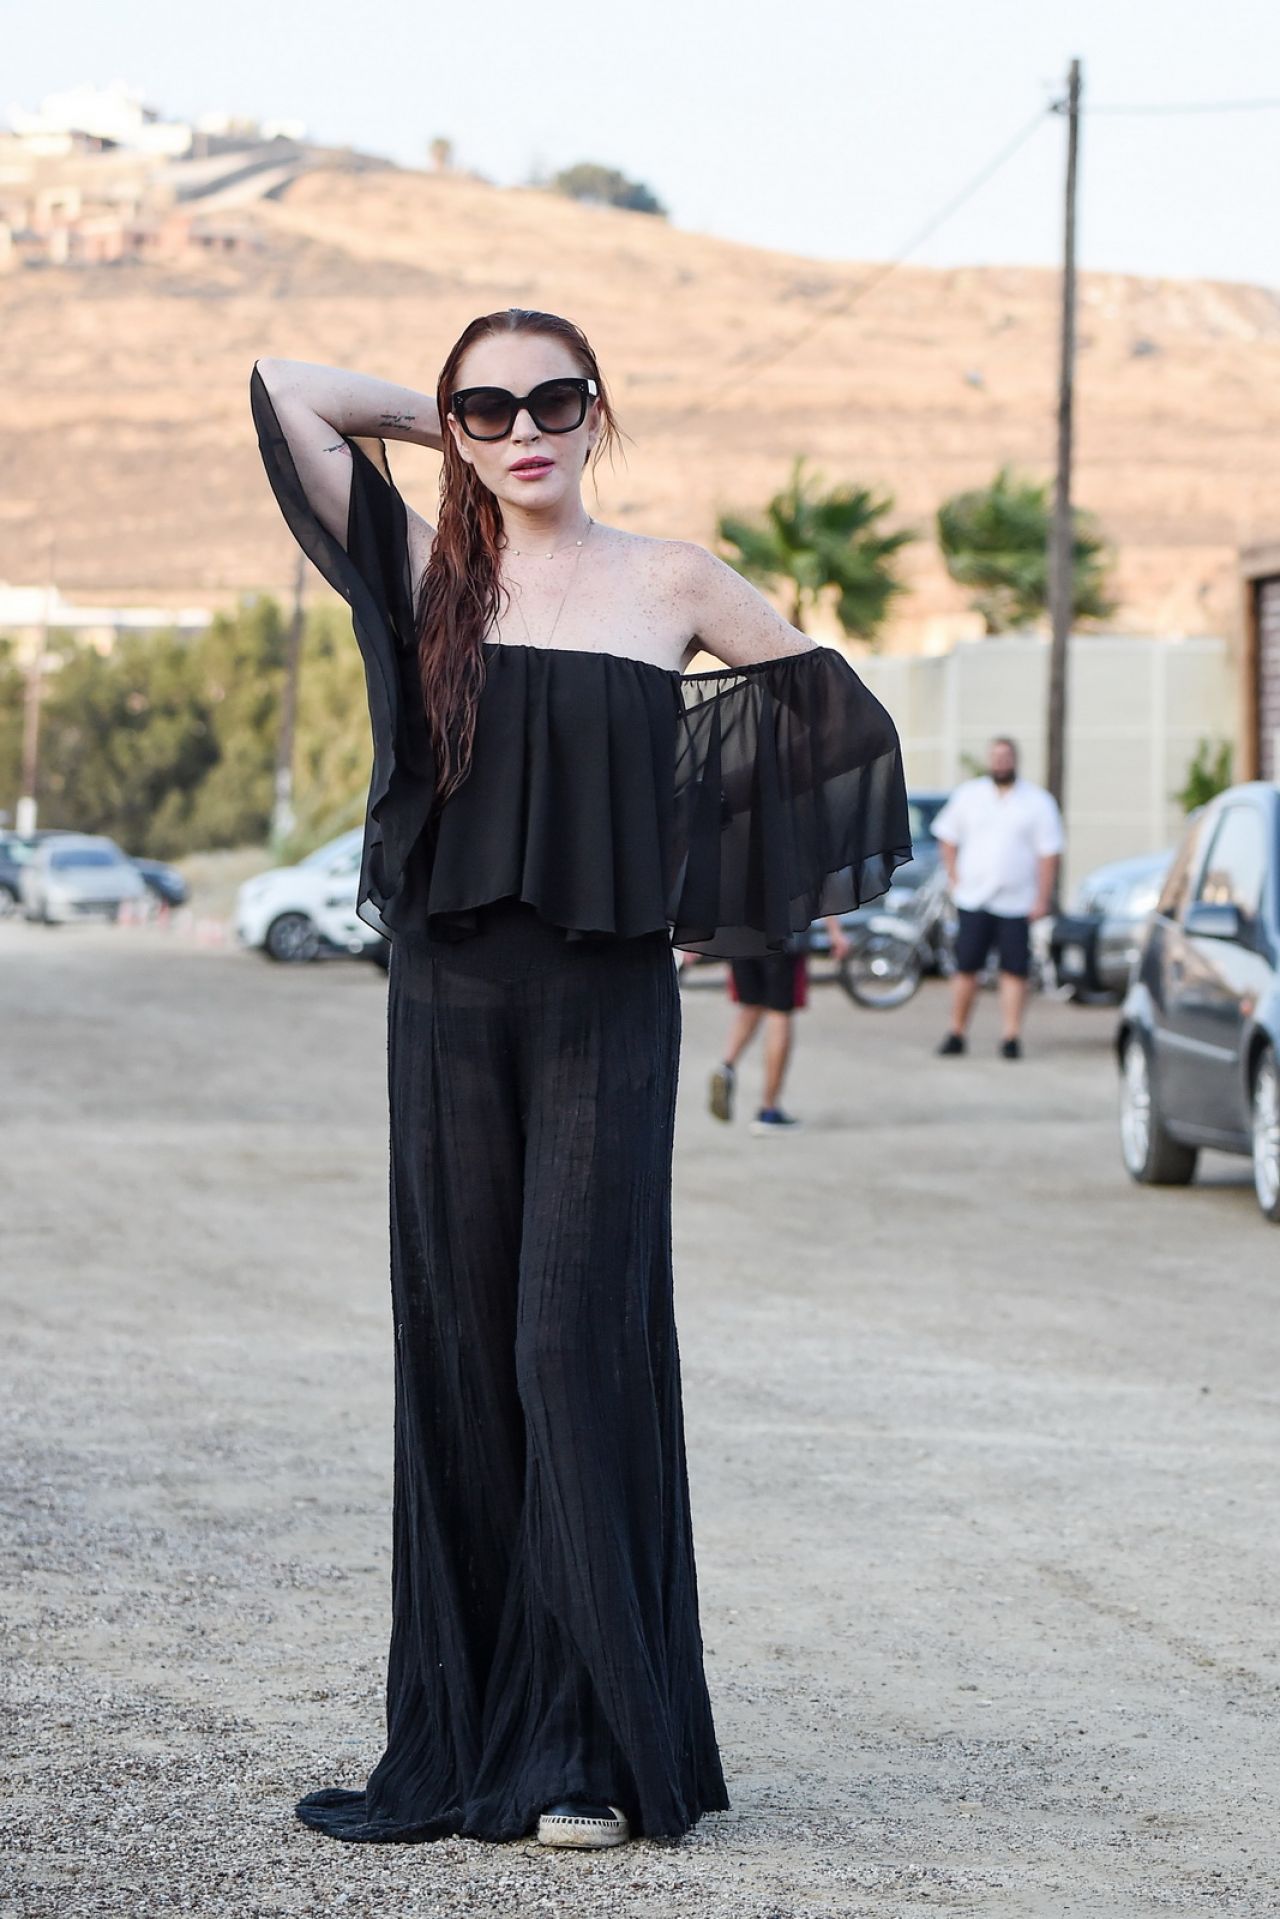 lindsay-lohan-in-a-black-outfit-mykonos-june-2018-8.jpg